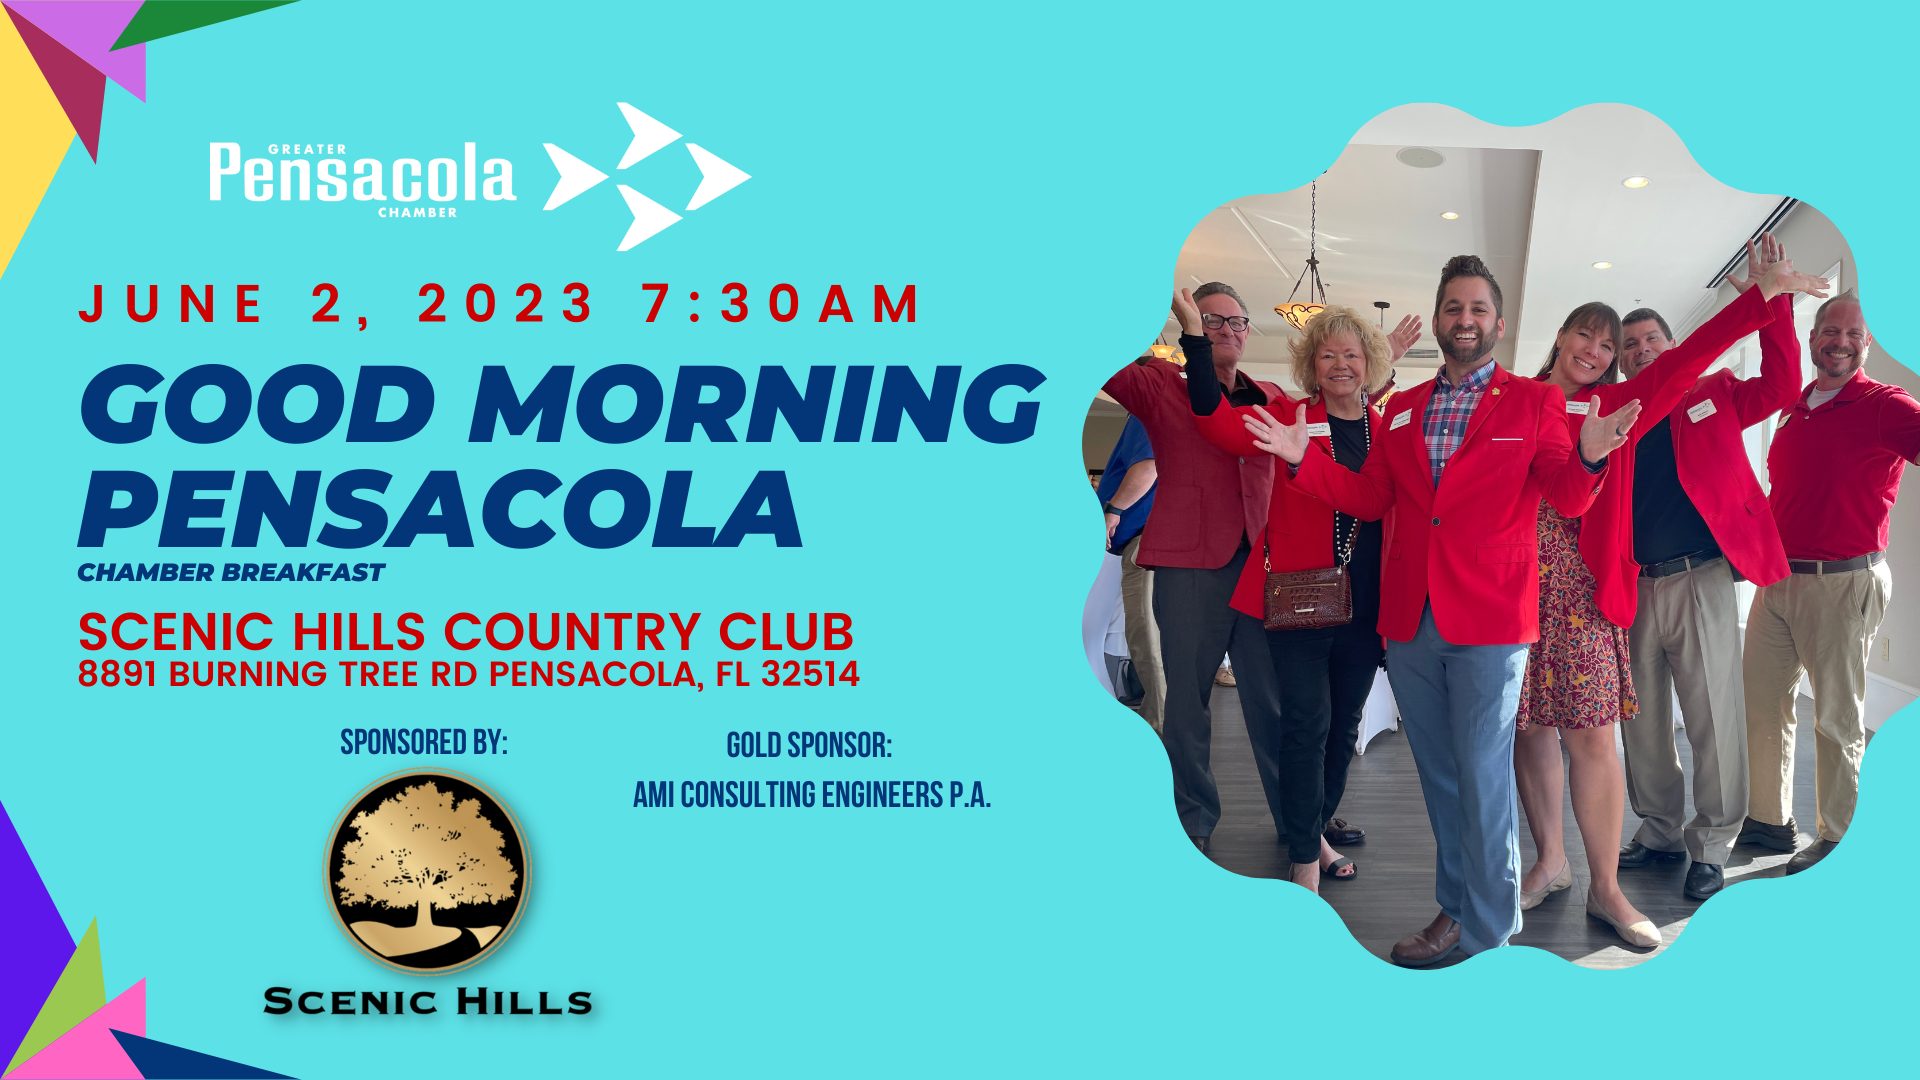 Good Morning Pensacola 2023 (1920 × 1080 px)